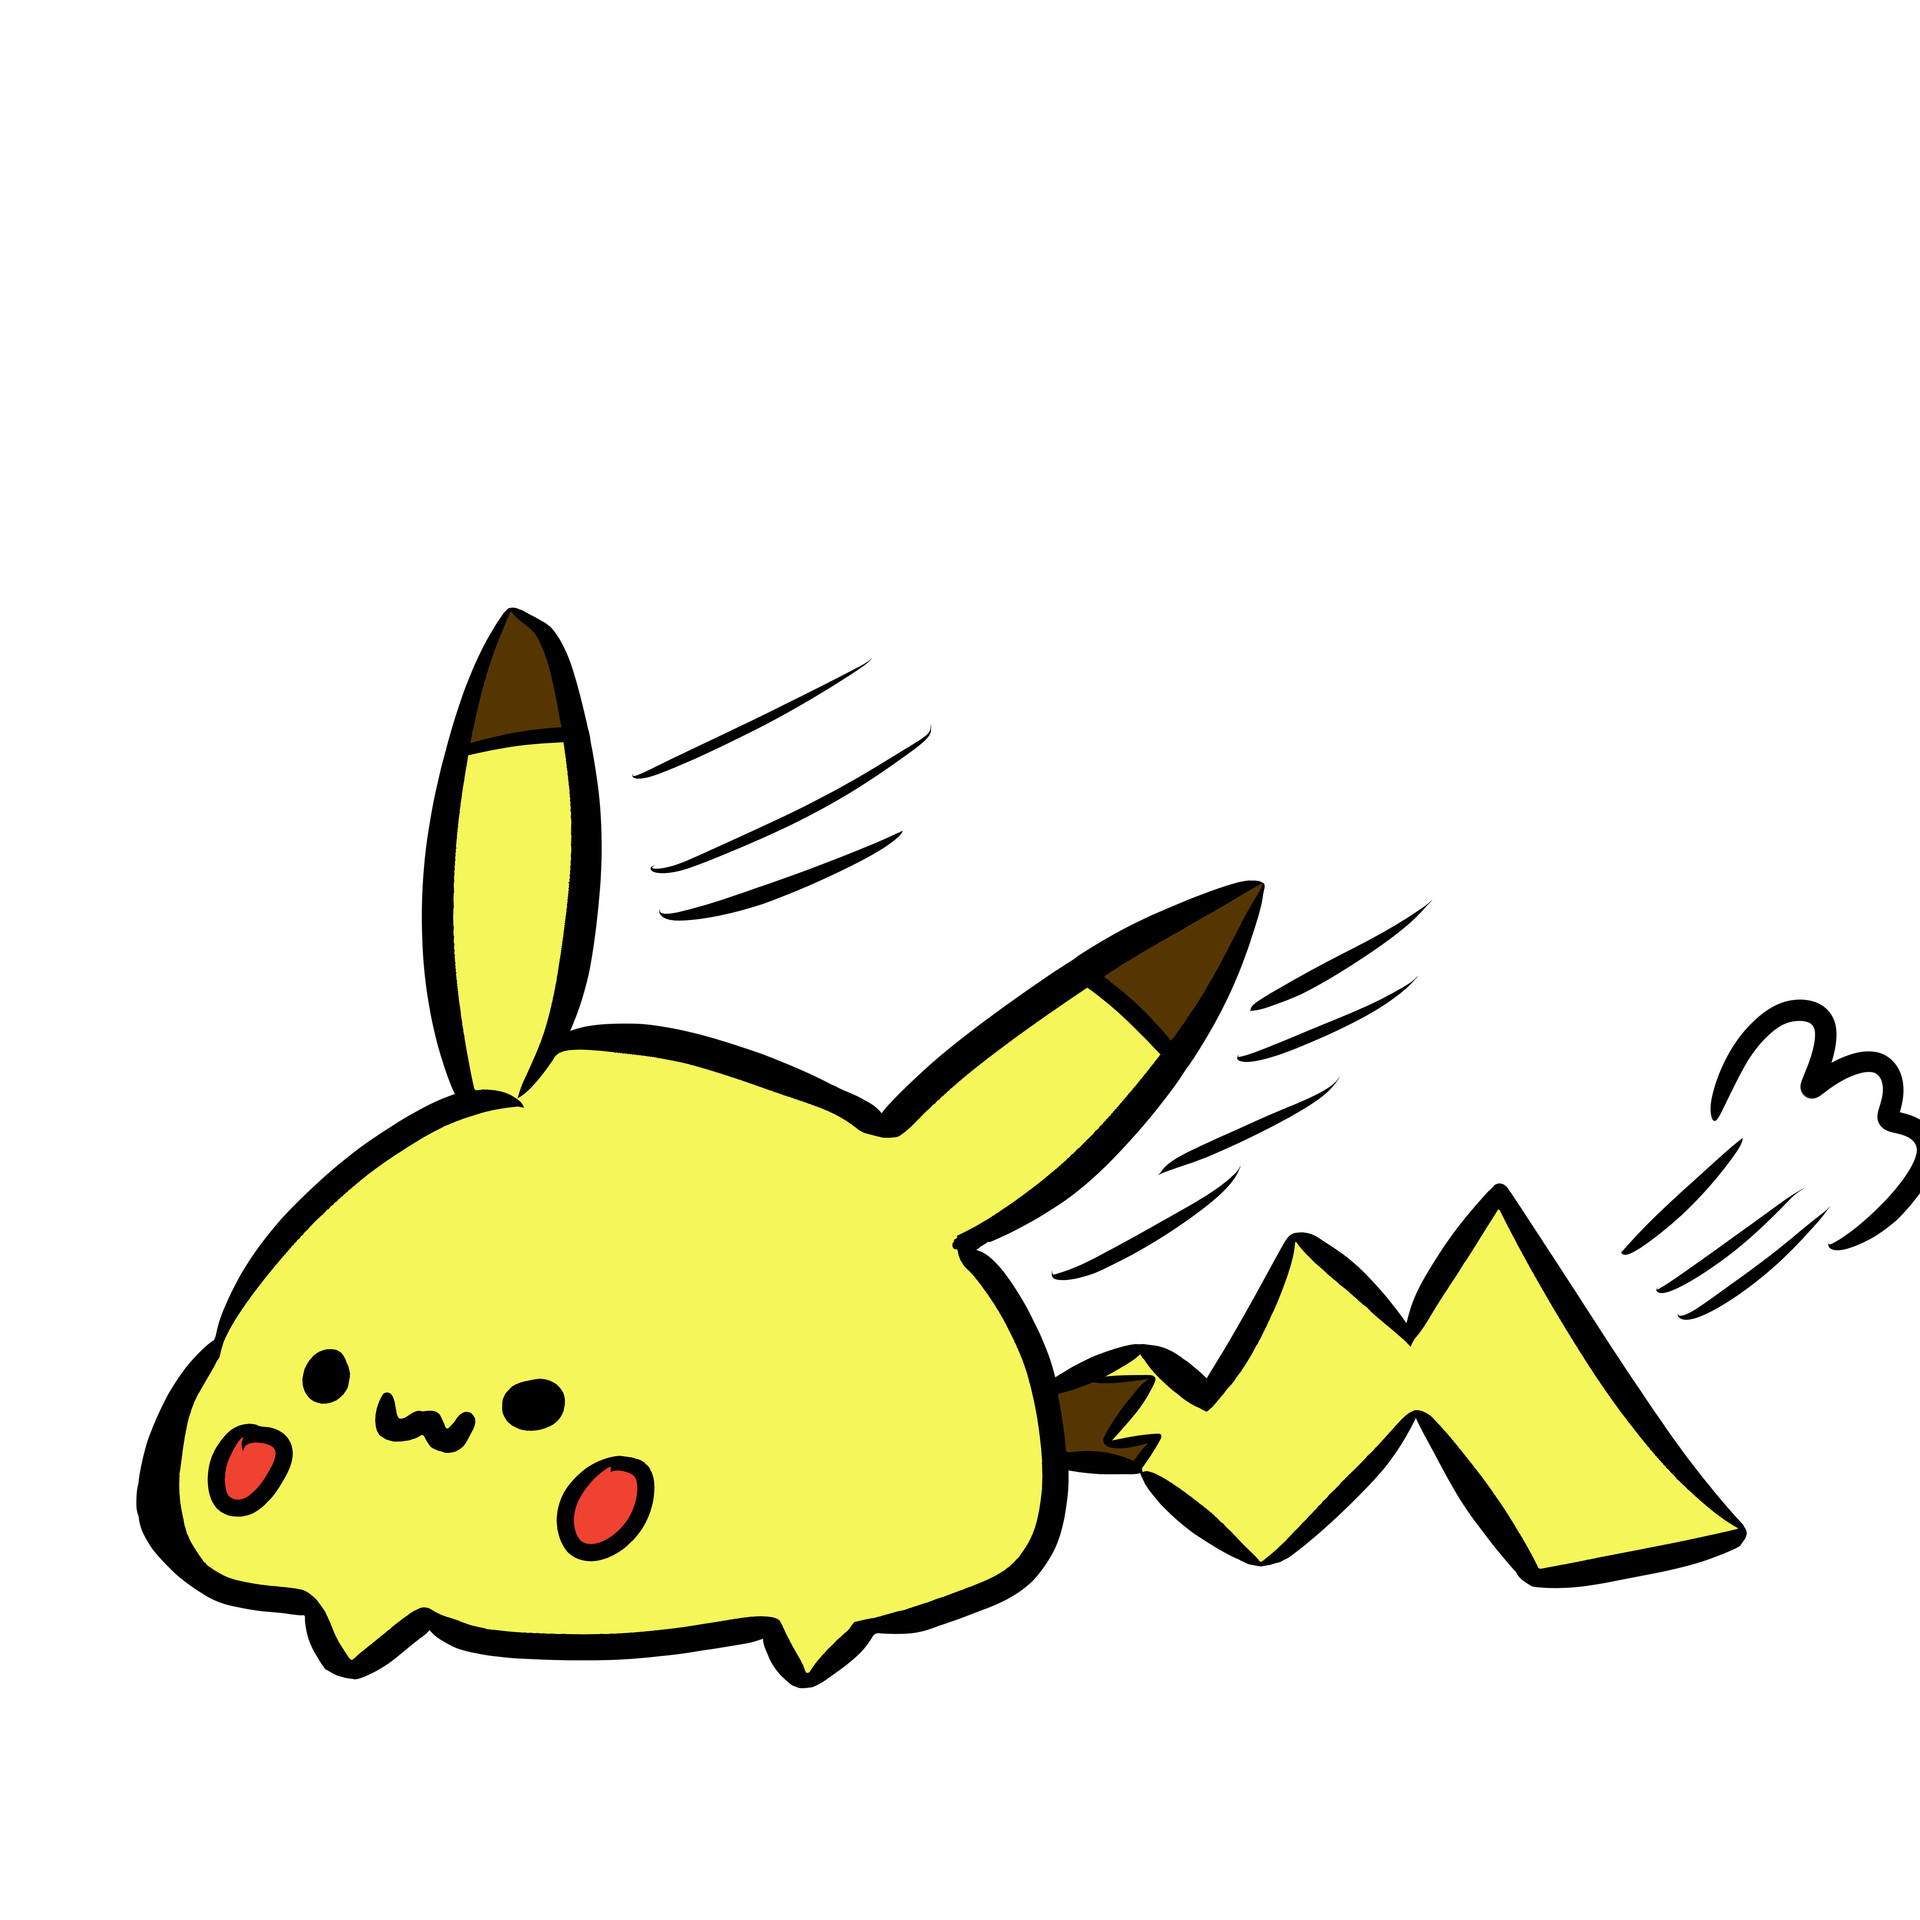 ArtStation - Chibi Pikachu